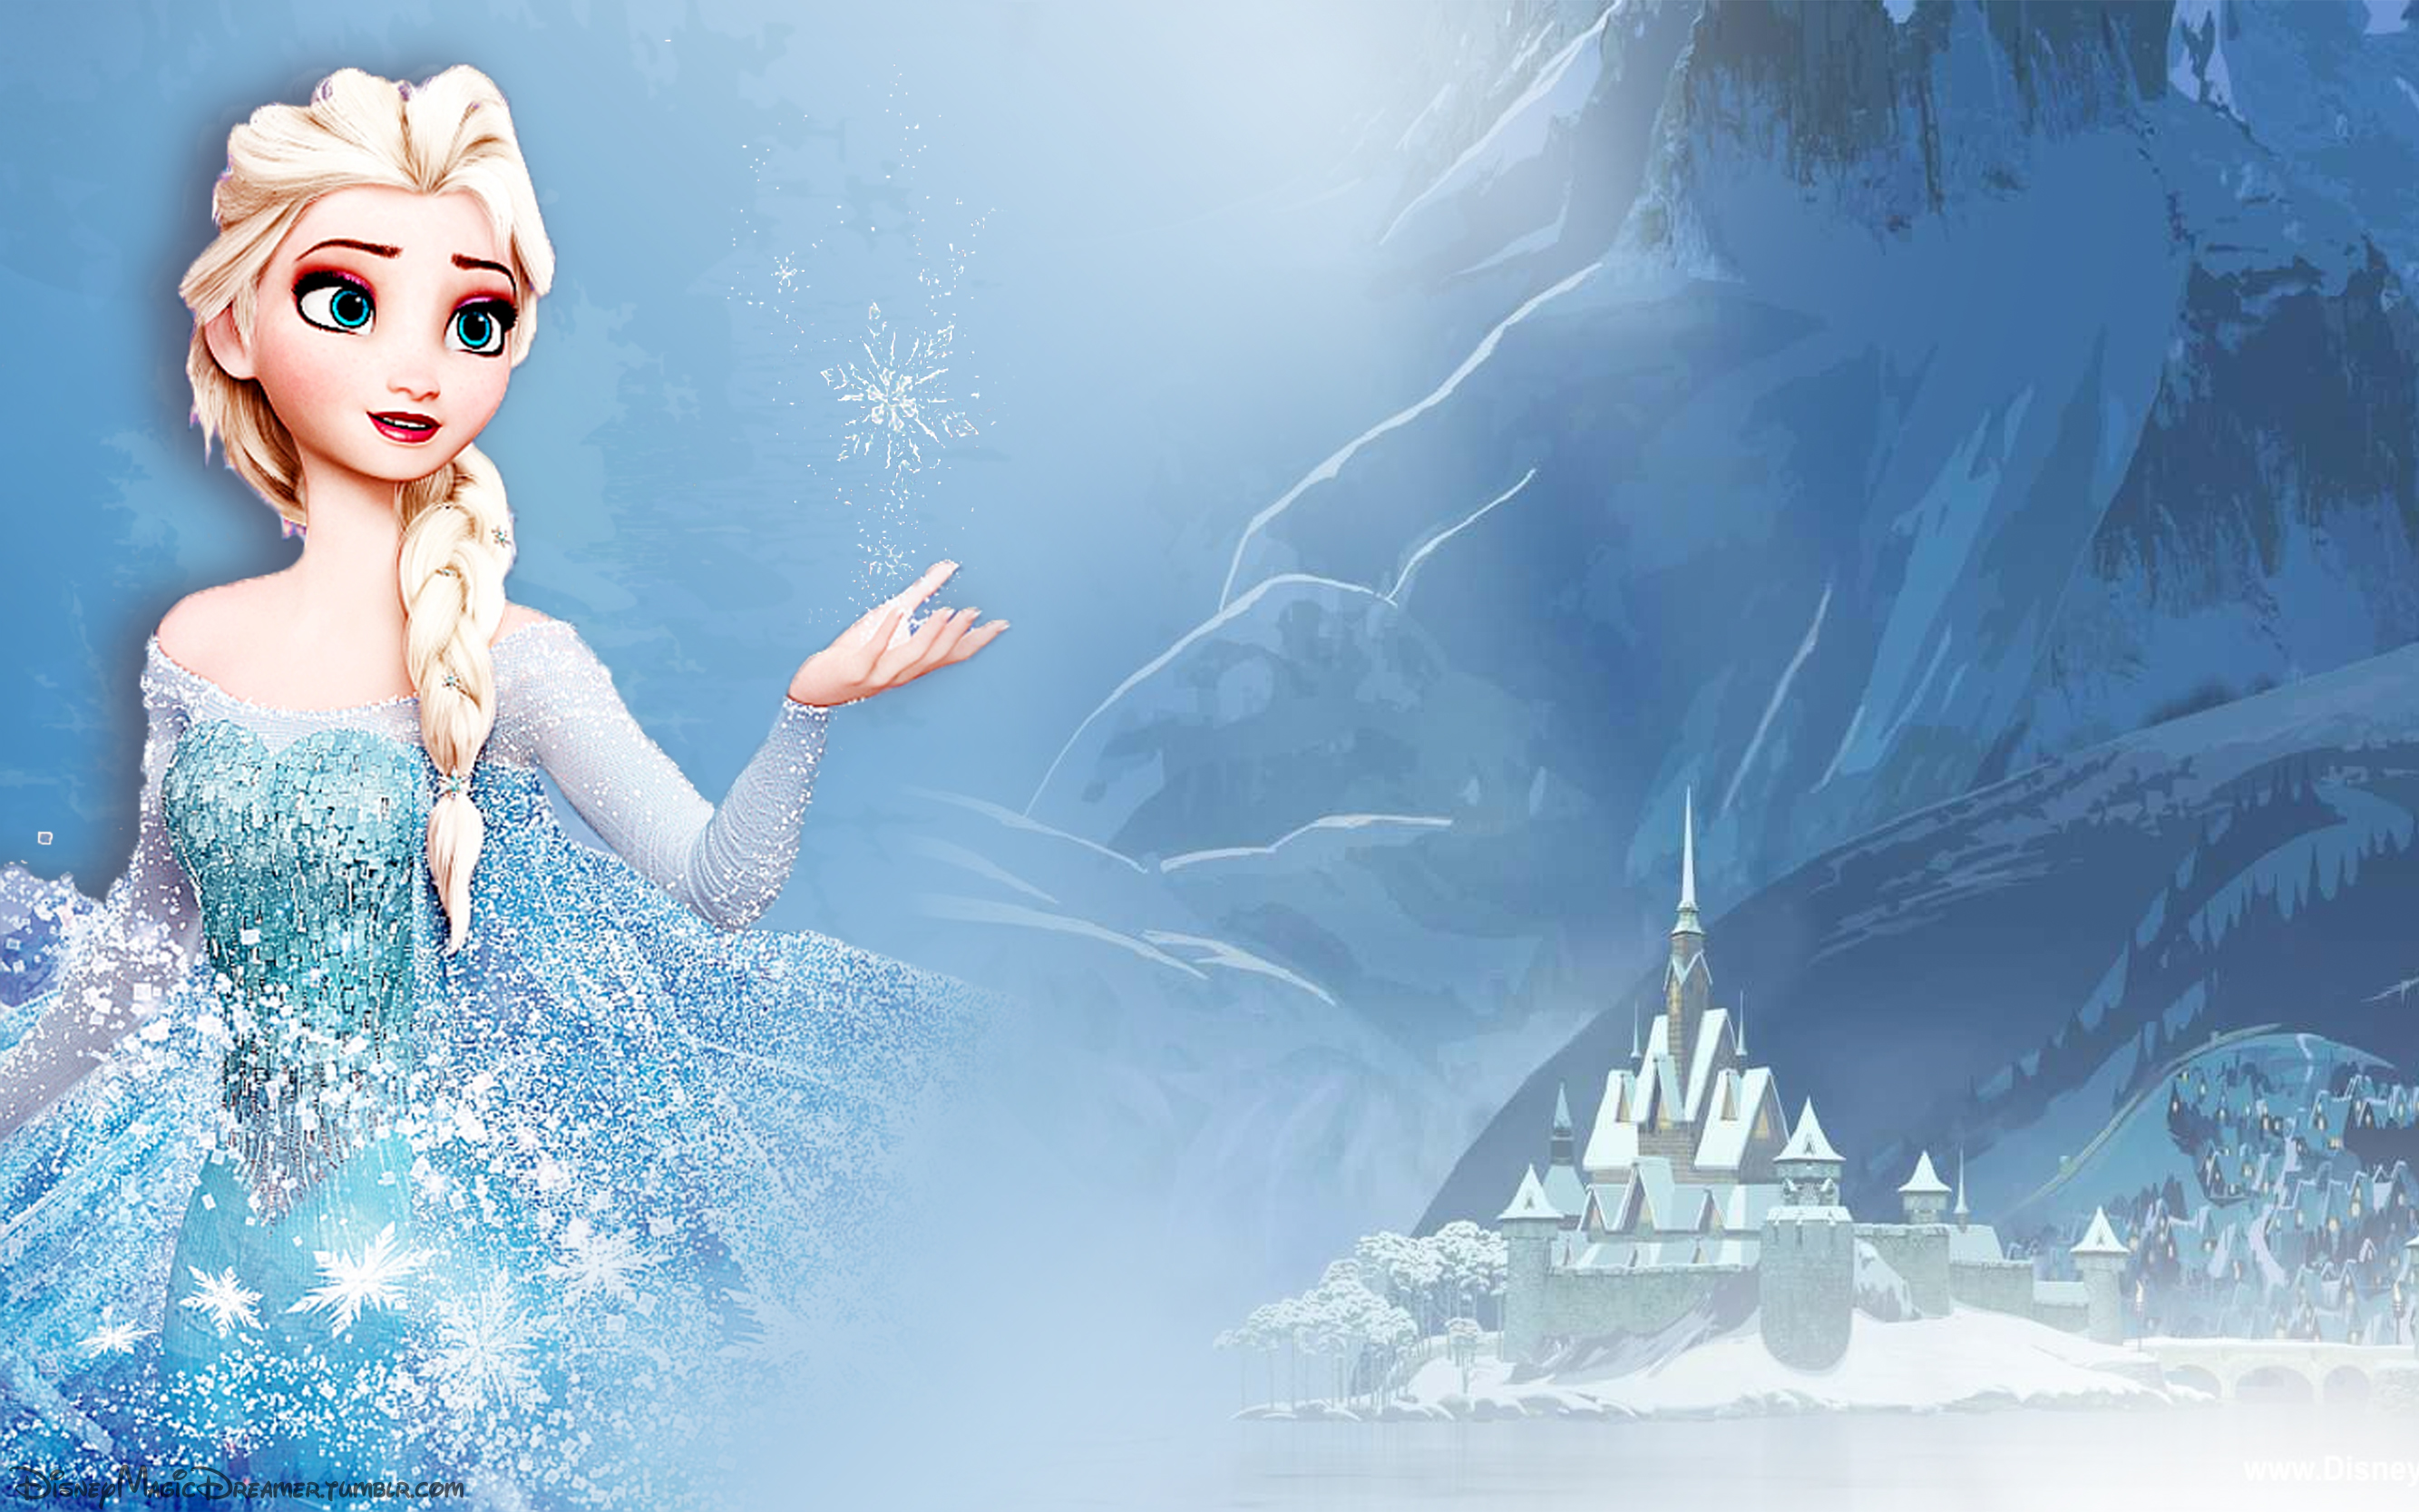 Frozen Theme Song Movie Songs Tv Soundtracks